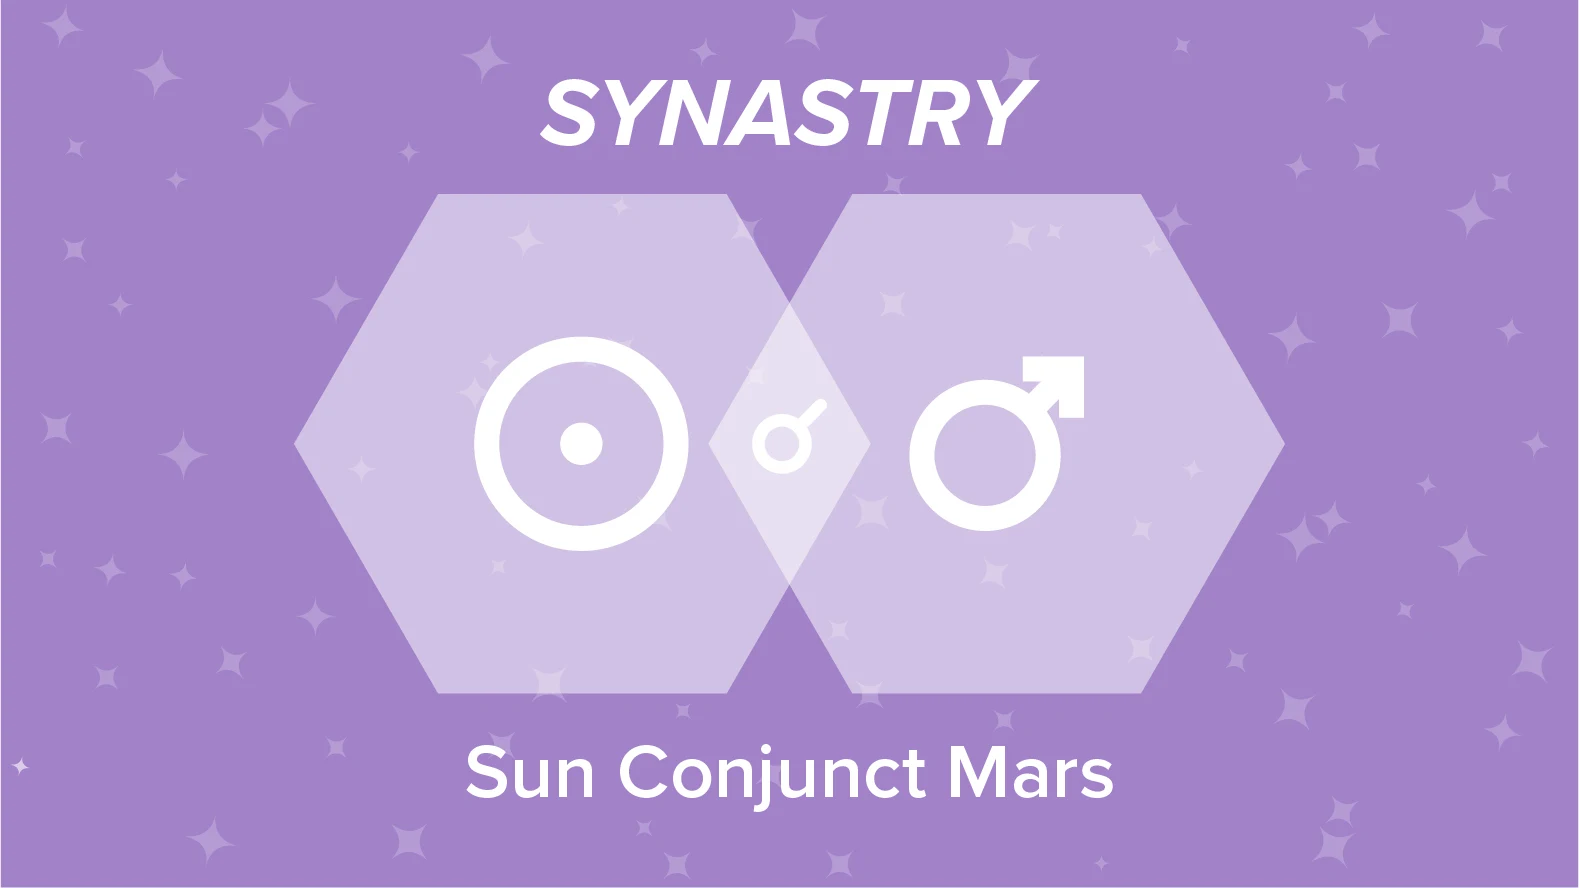 Sun Conjunct Mars Synastry